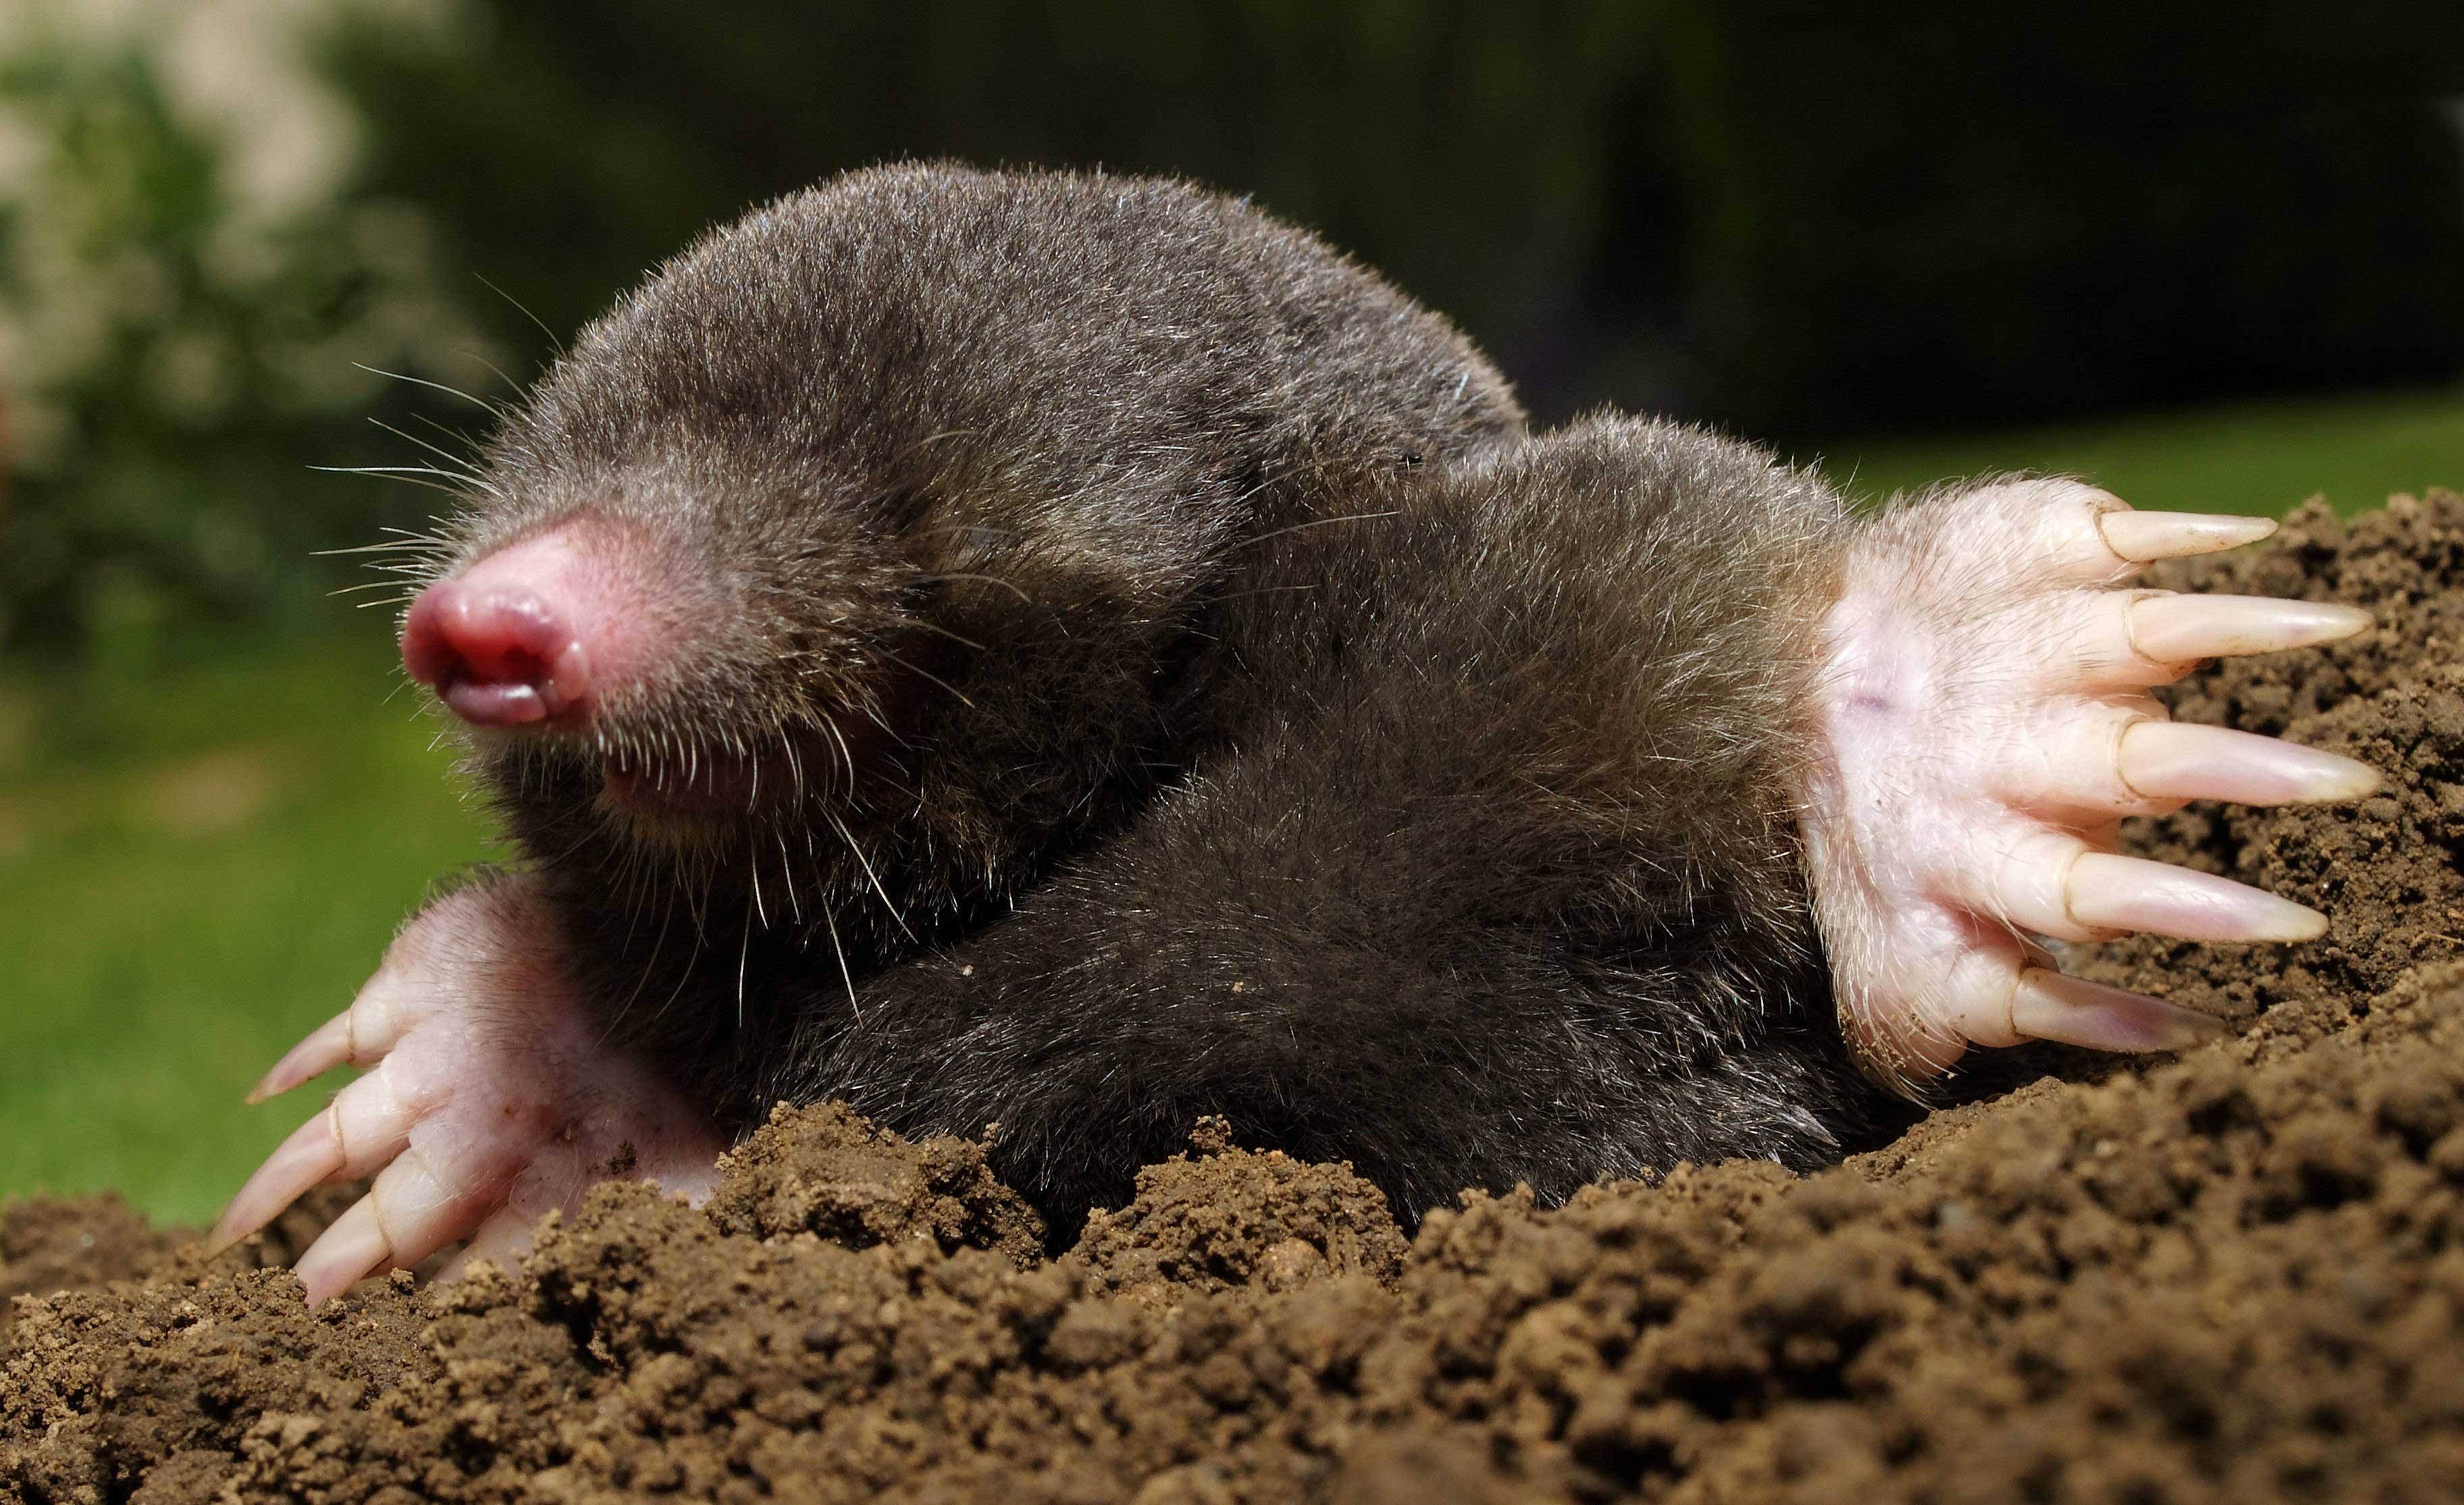 A mole crawling out of its molehill.